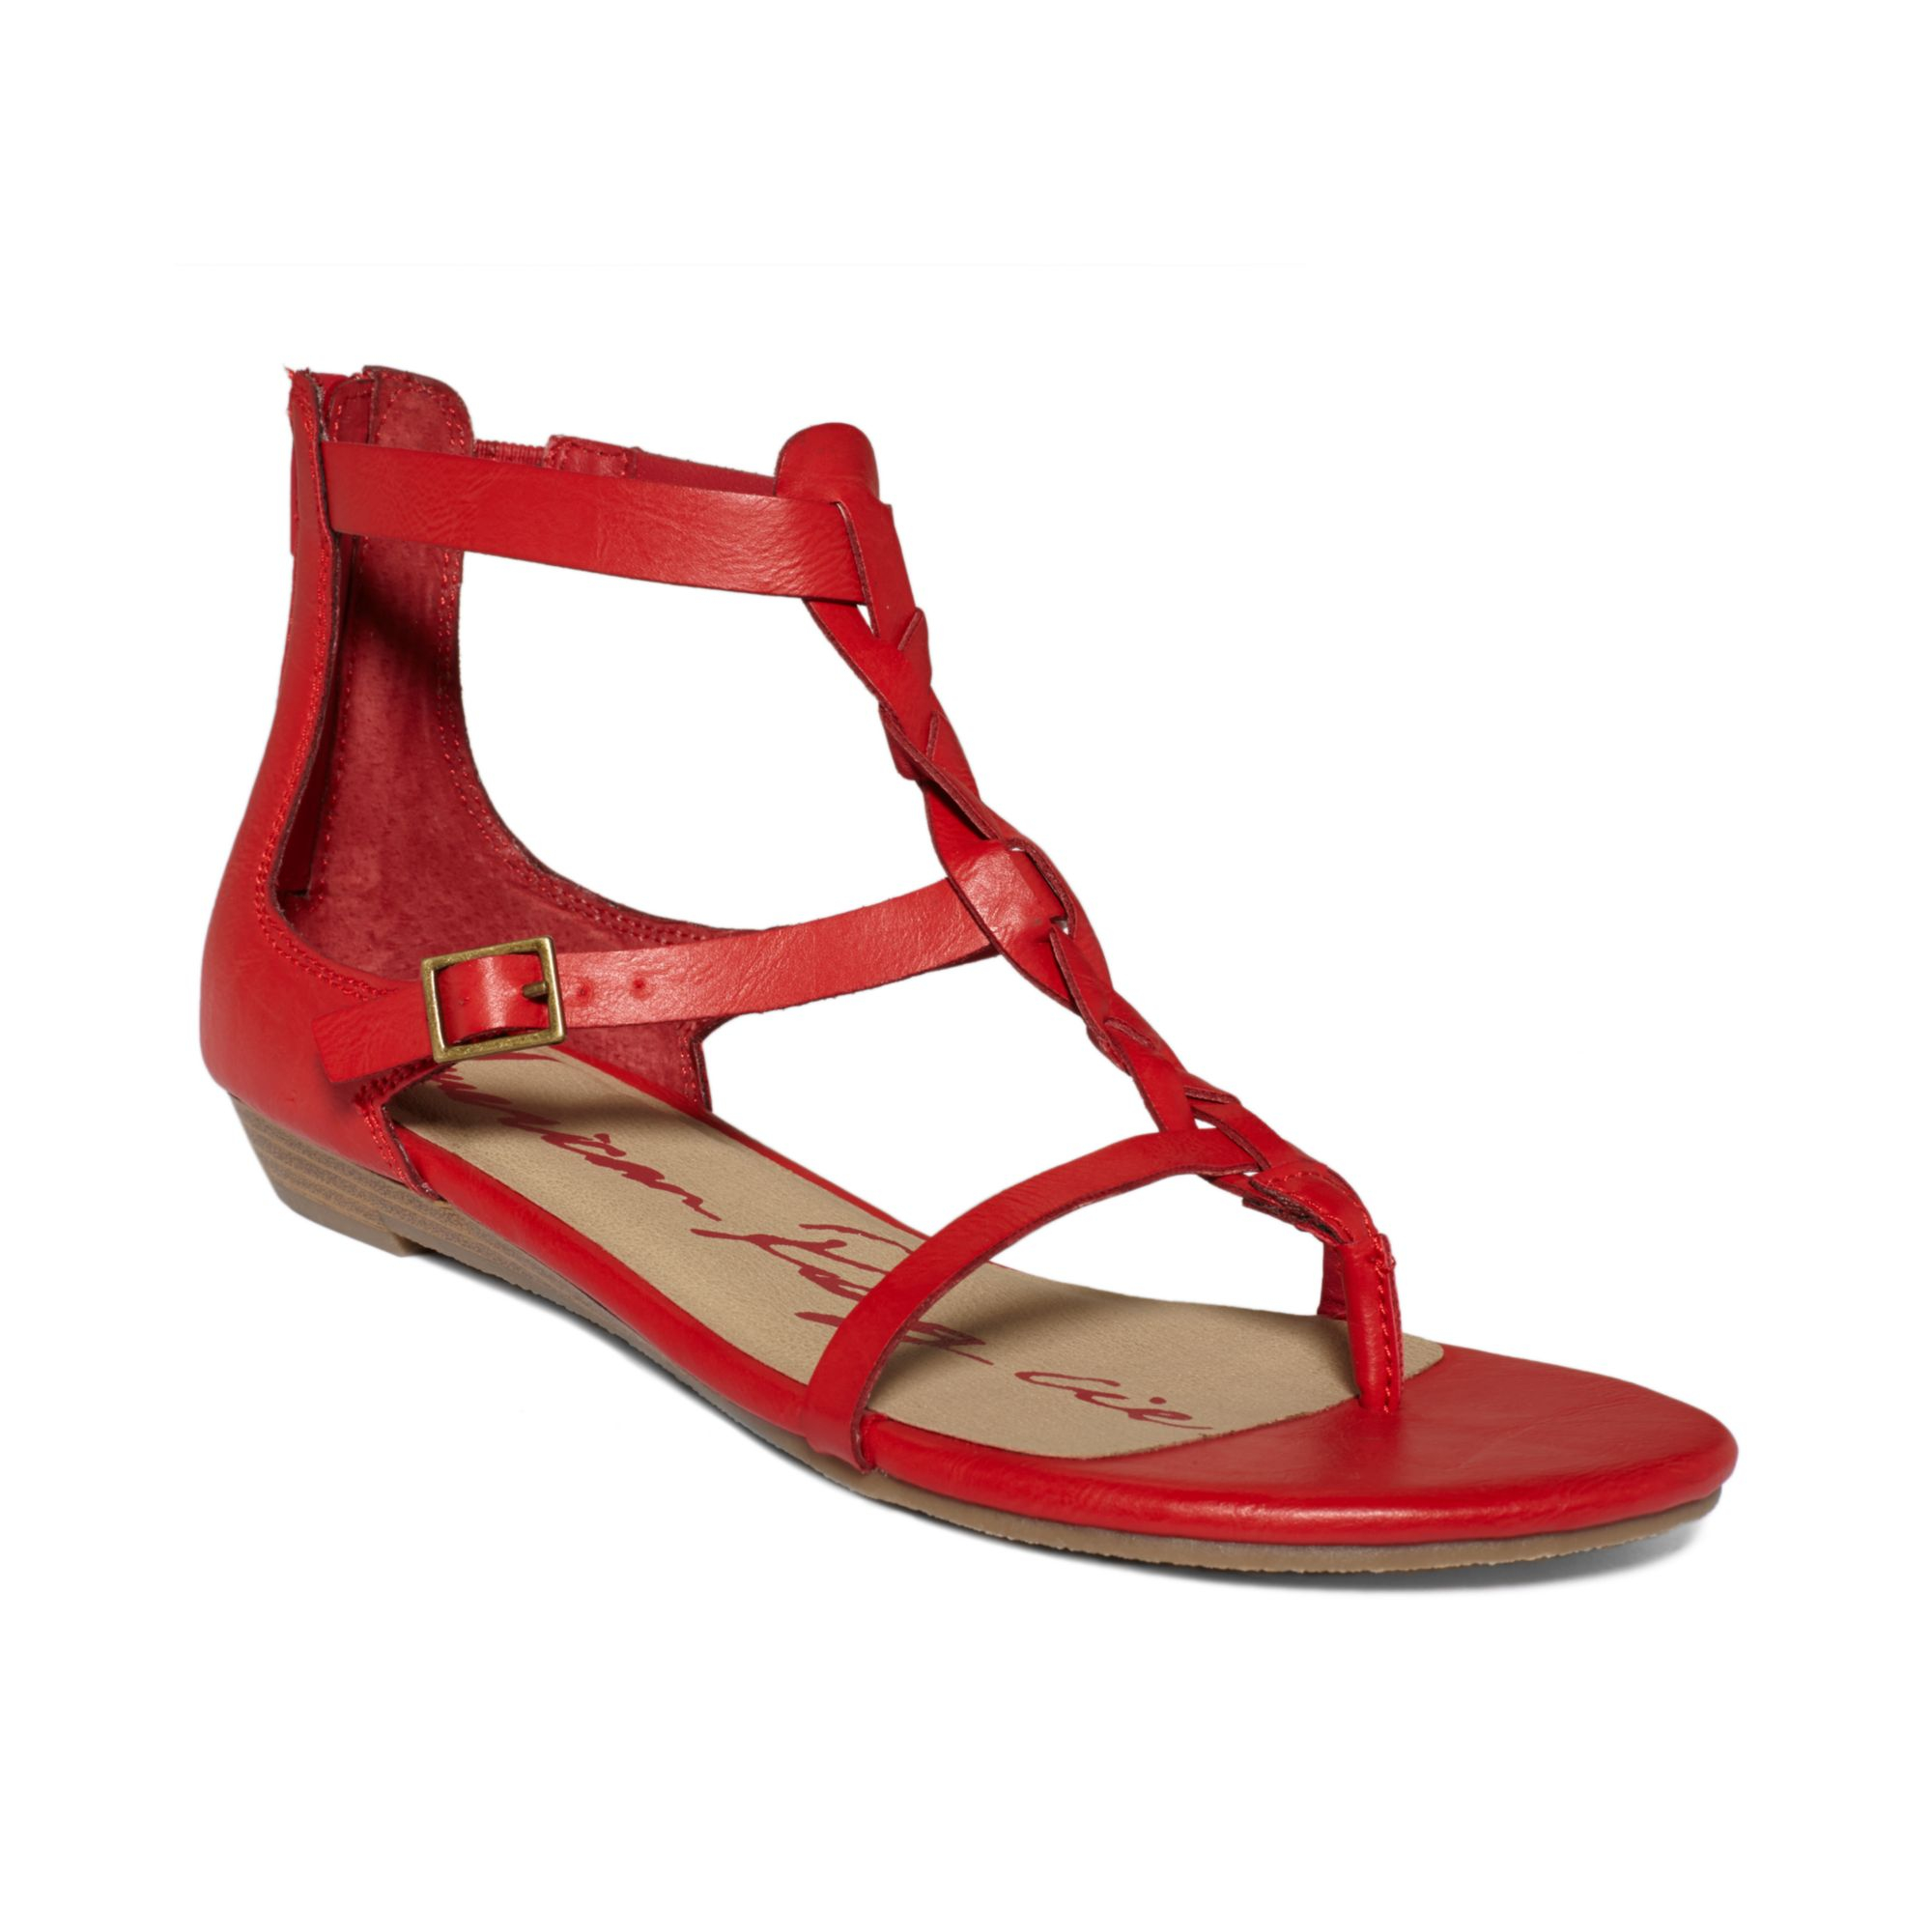 American Rag Boyton Demi Wedge Sandals in Red | Lyst